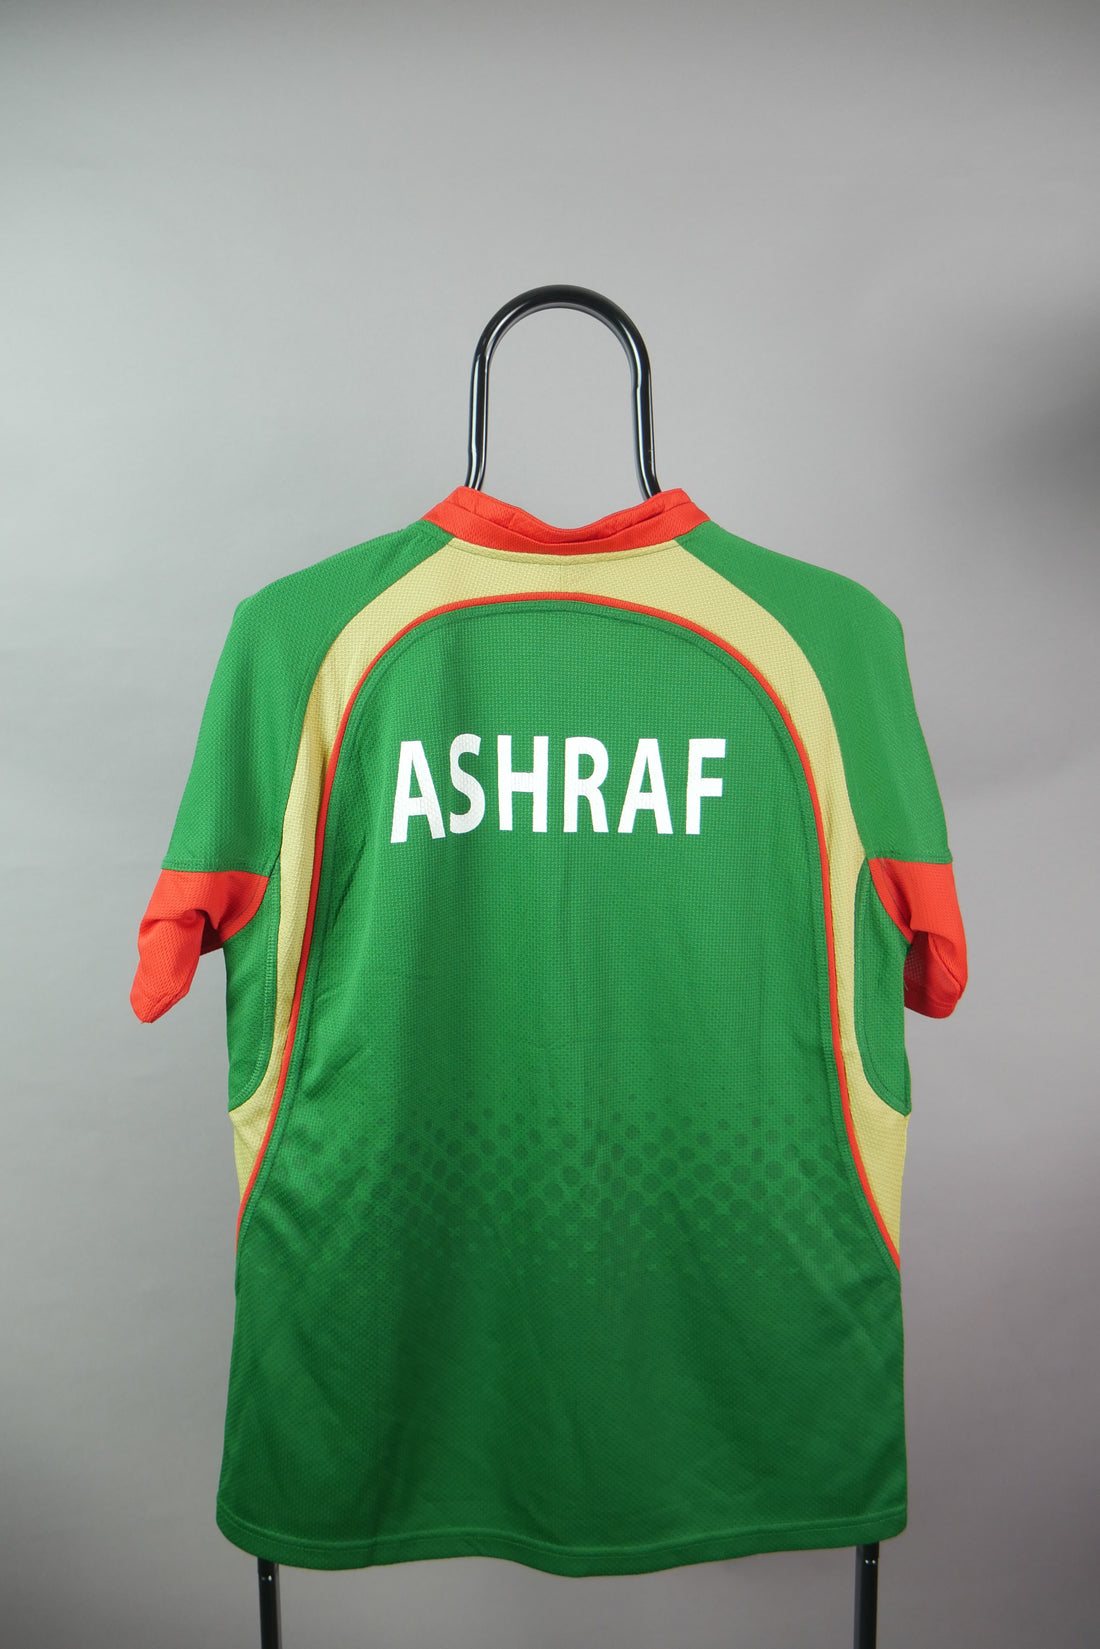 The Bangledesh Cricket T-Shirt (XL)